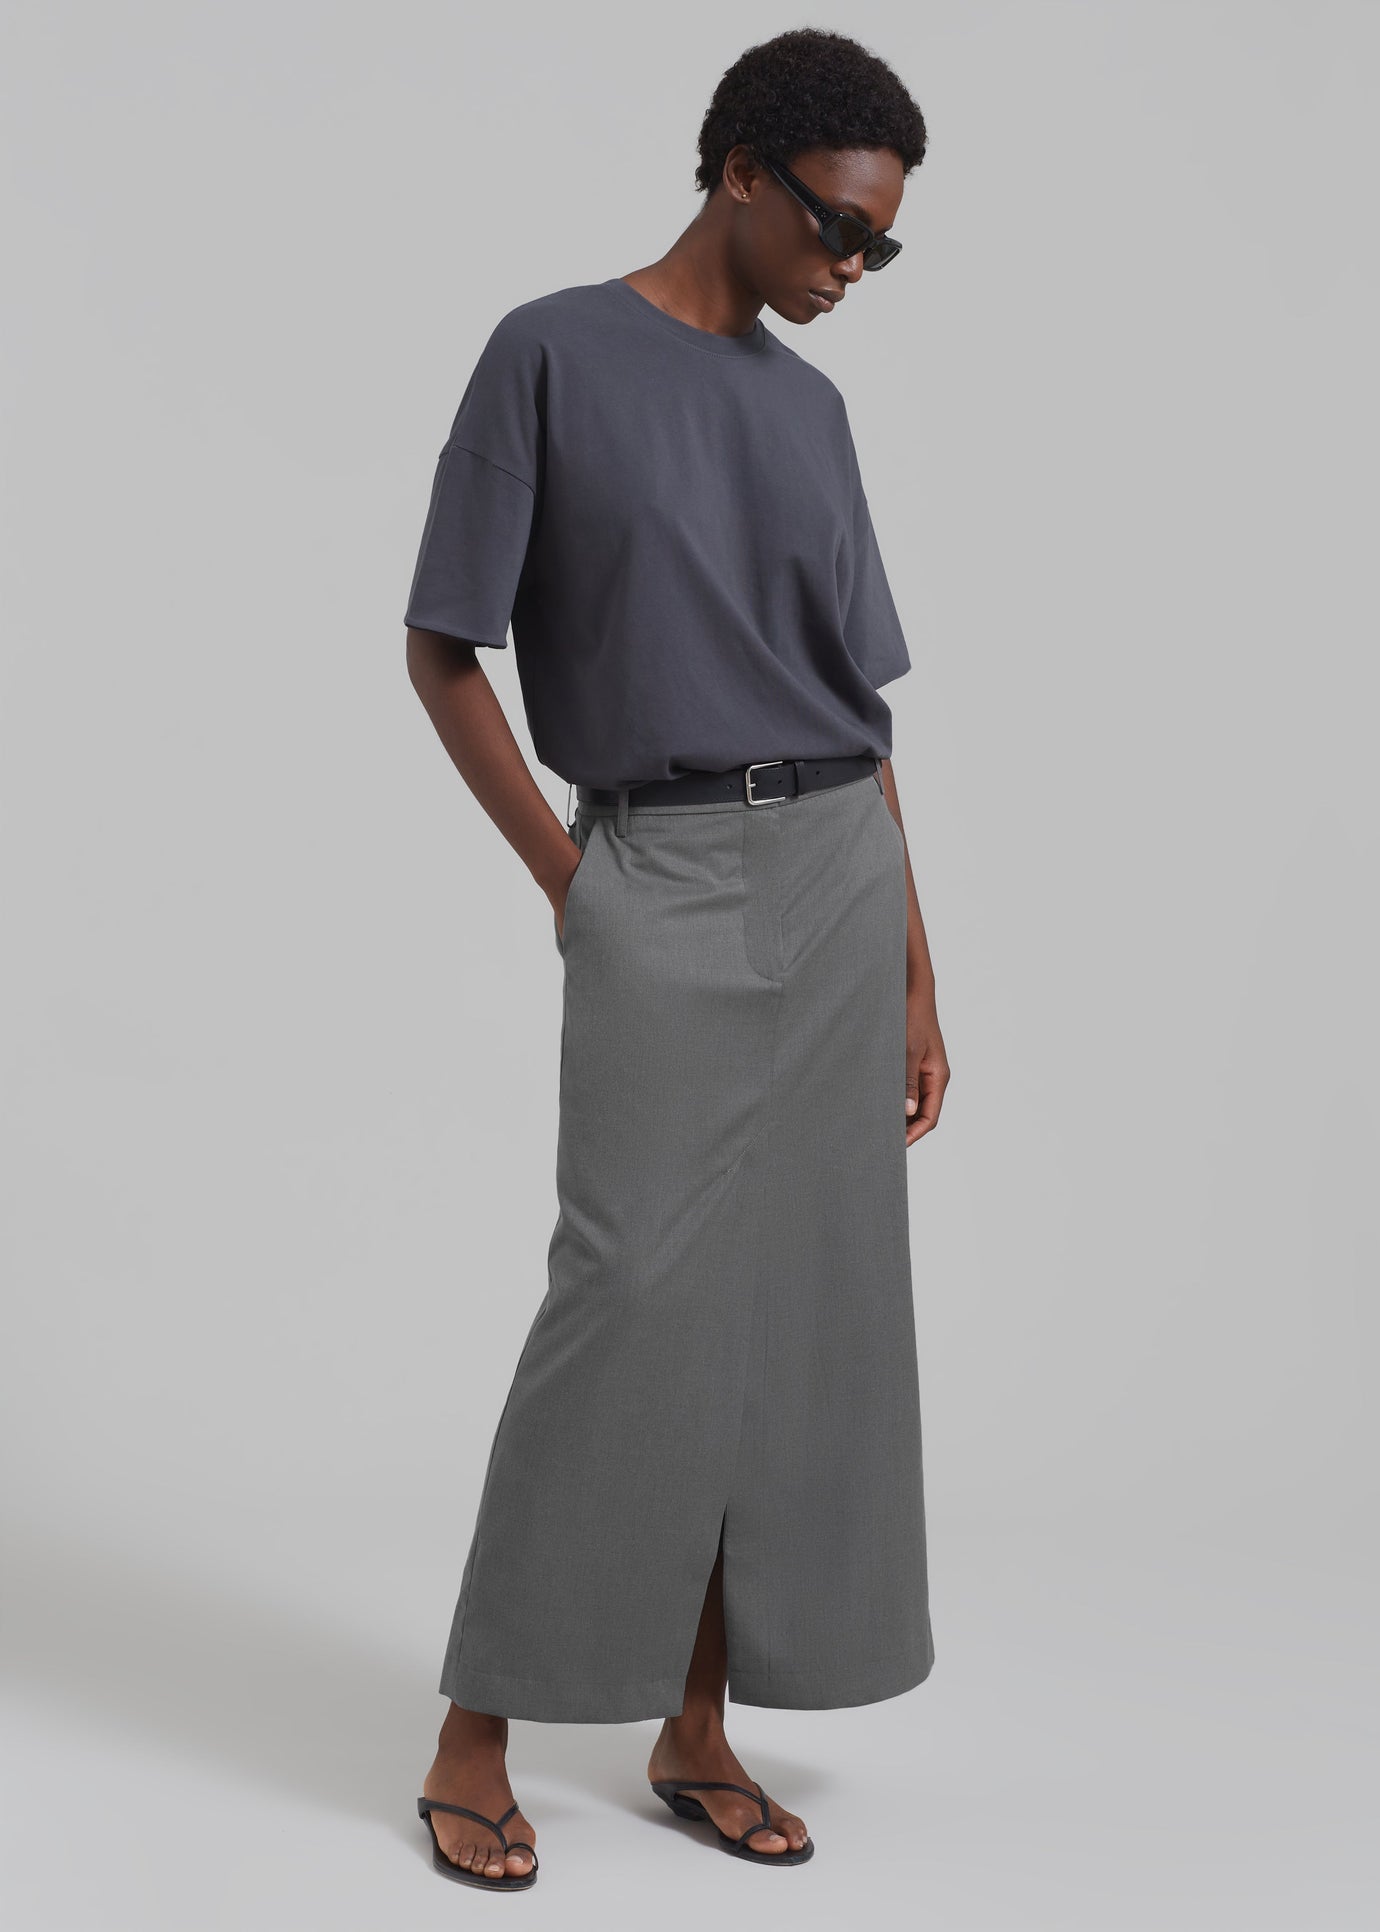 Malvo Long Pencil Skirt - Charcoal